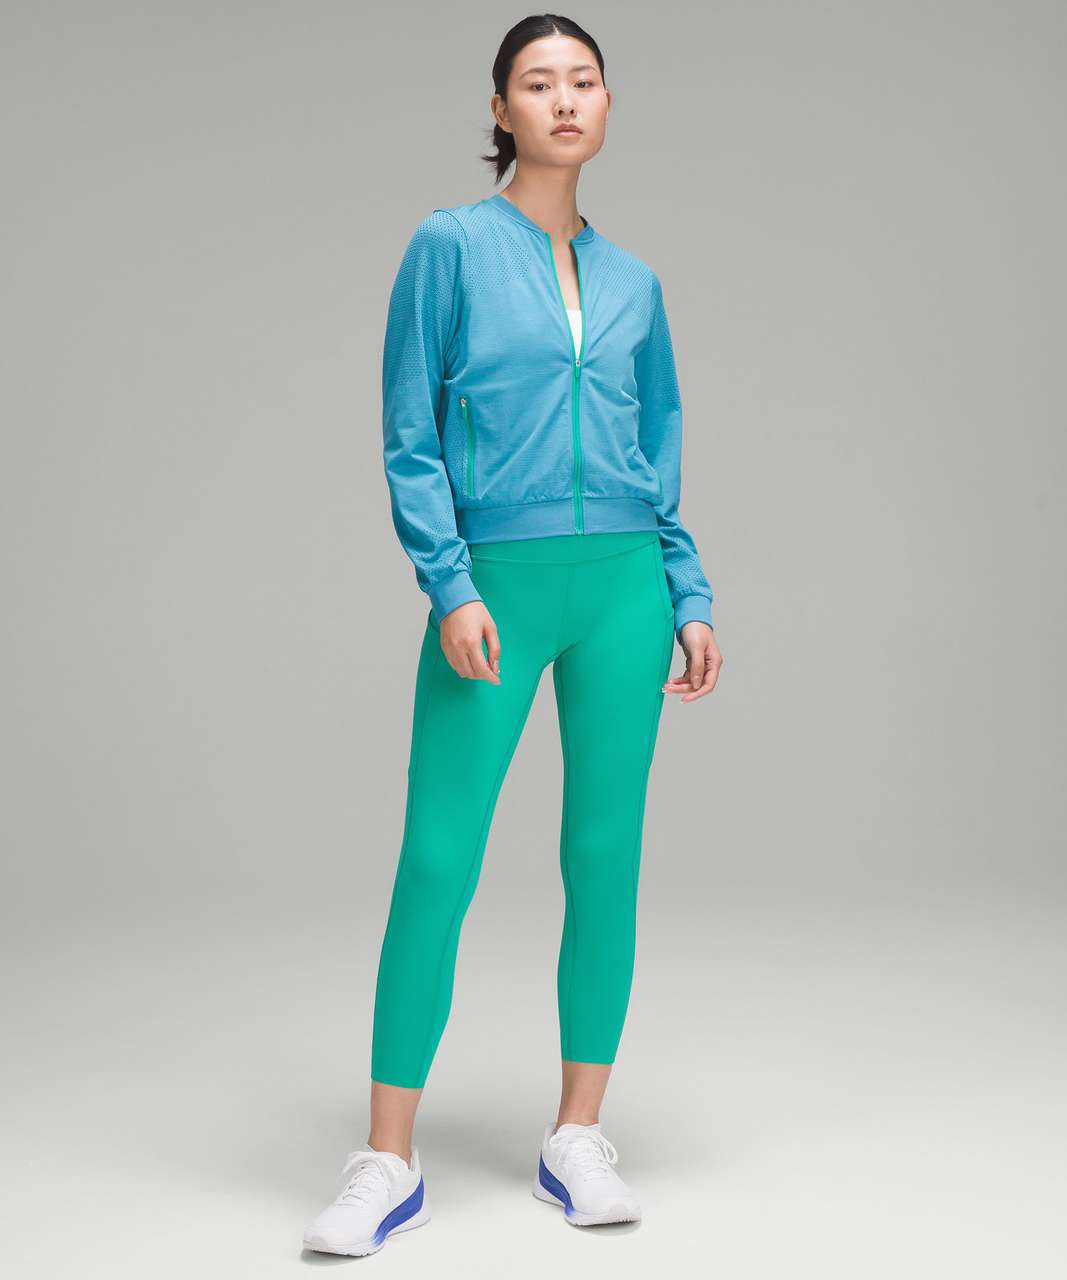 Lululemon Women Activewear Jacket 4 Green To Class Shawl Neck Button Up  Pockets